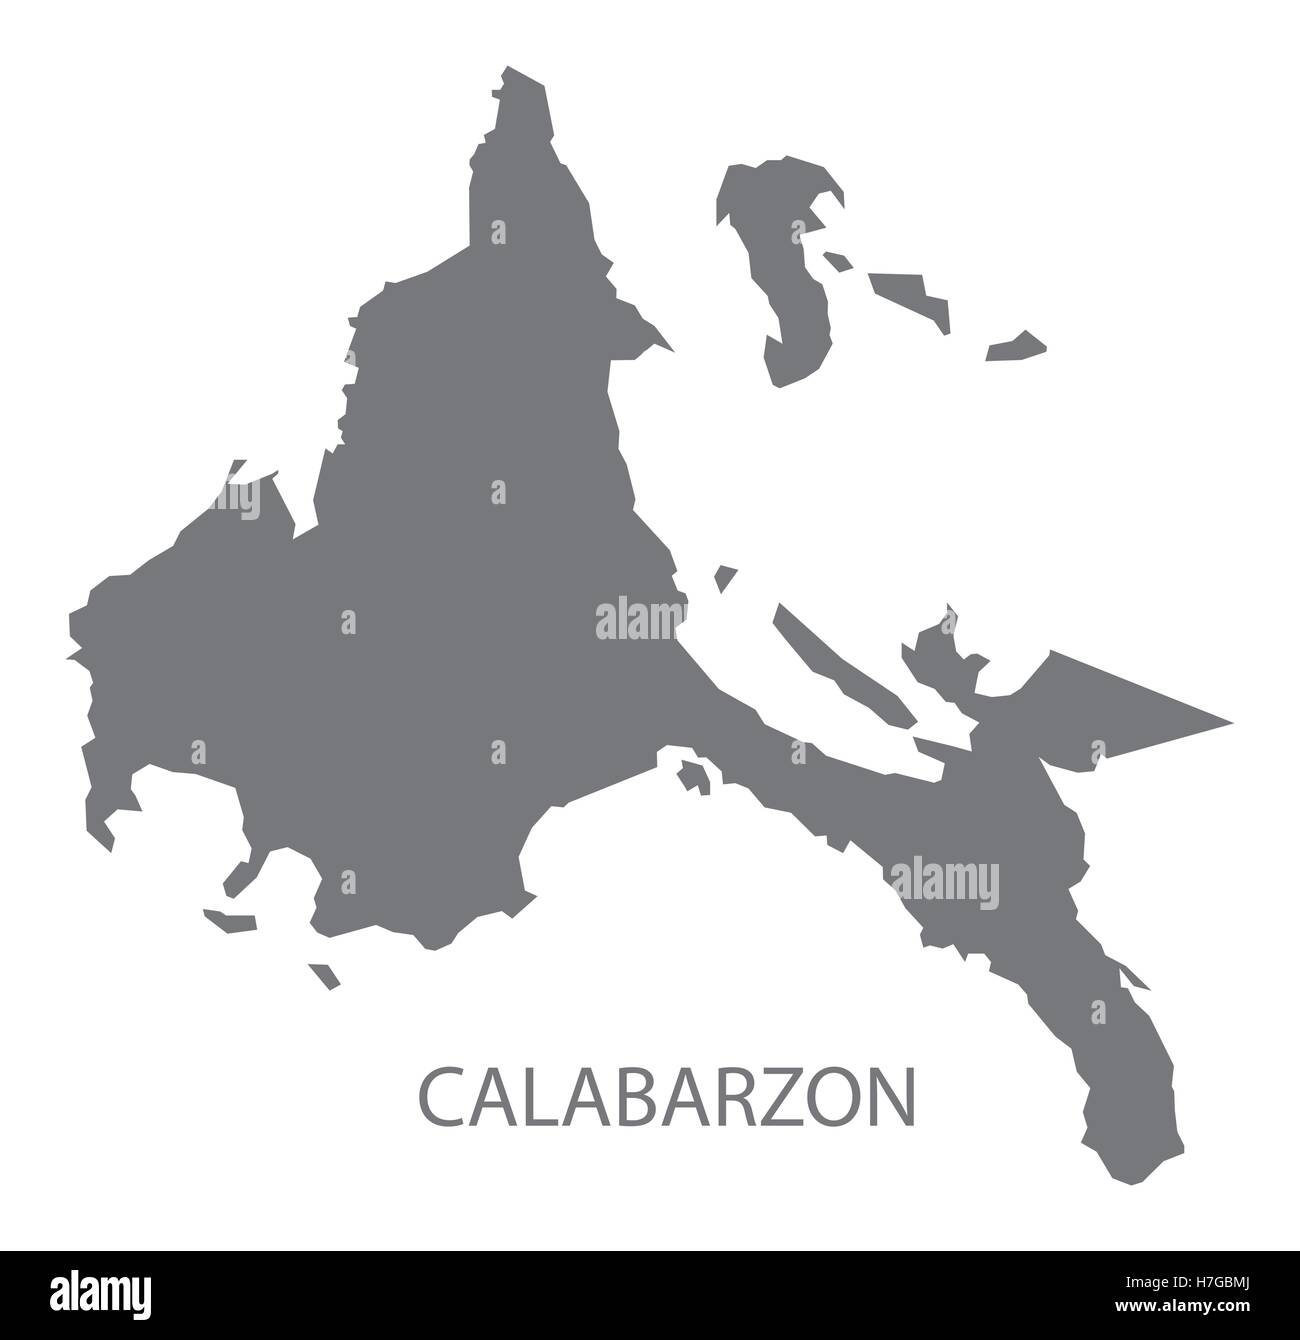 Calabarzon Philippines Map grey Stock Vector